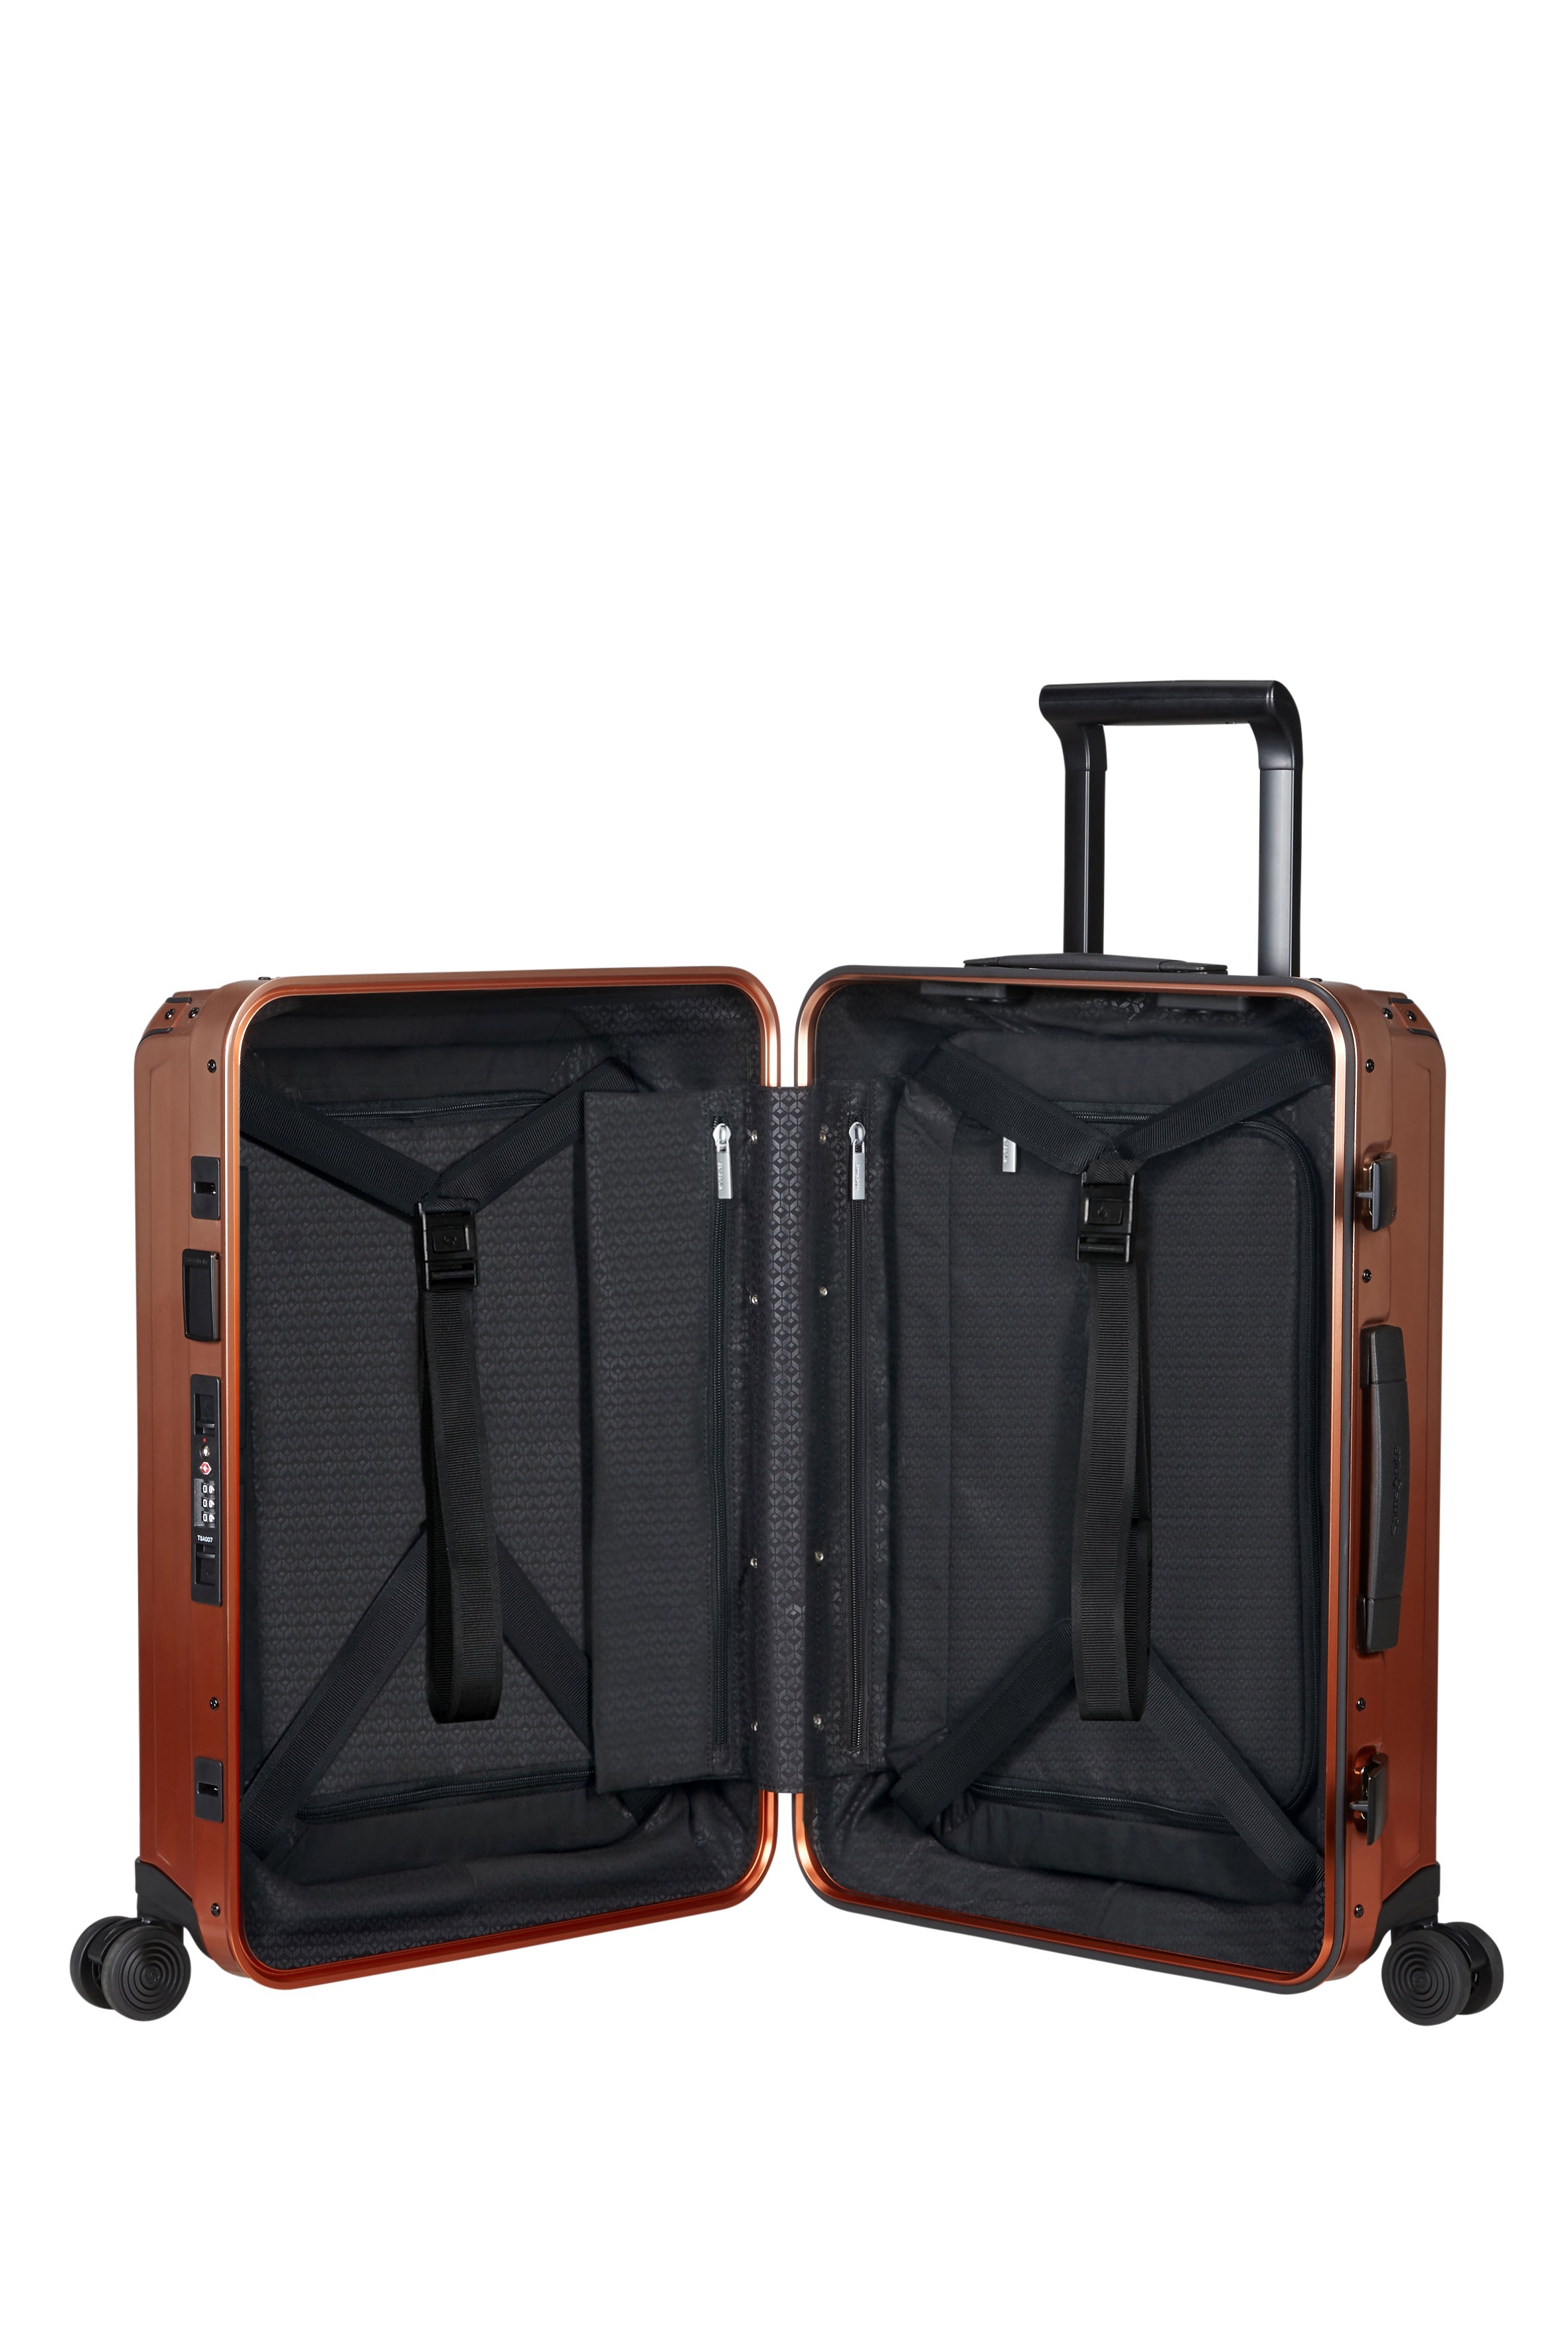 Samsonite - Lite Box ALU 55cm Small 4 Wheel Hard Suitcase - Gradient Copper-11